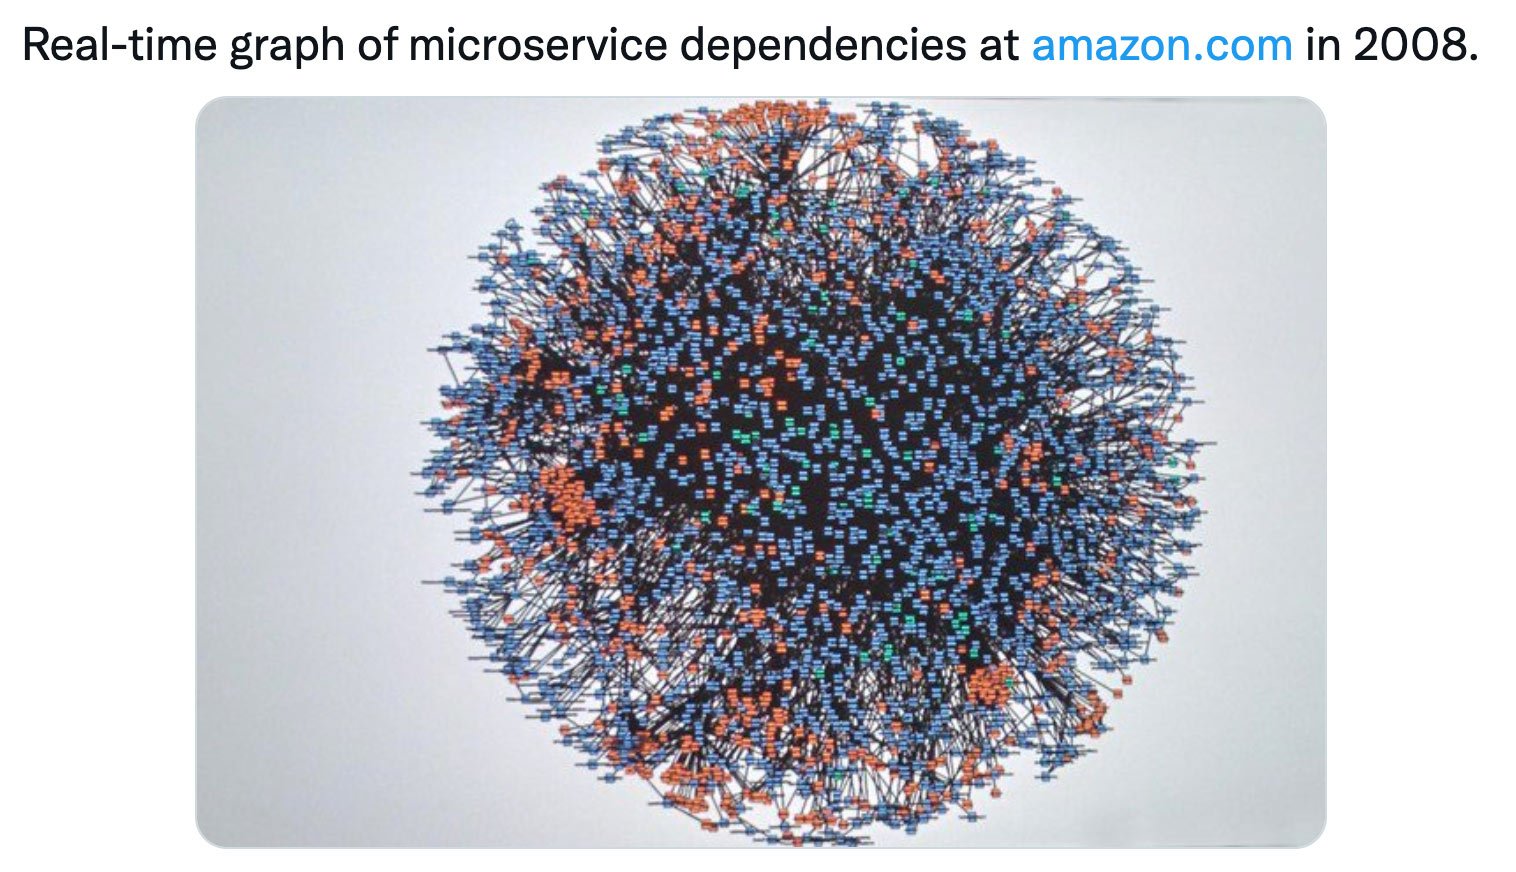 amazon microservices dependencies